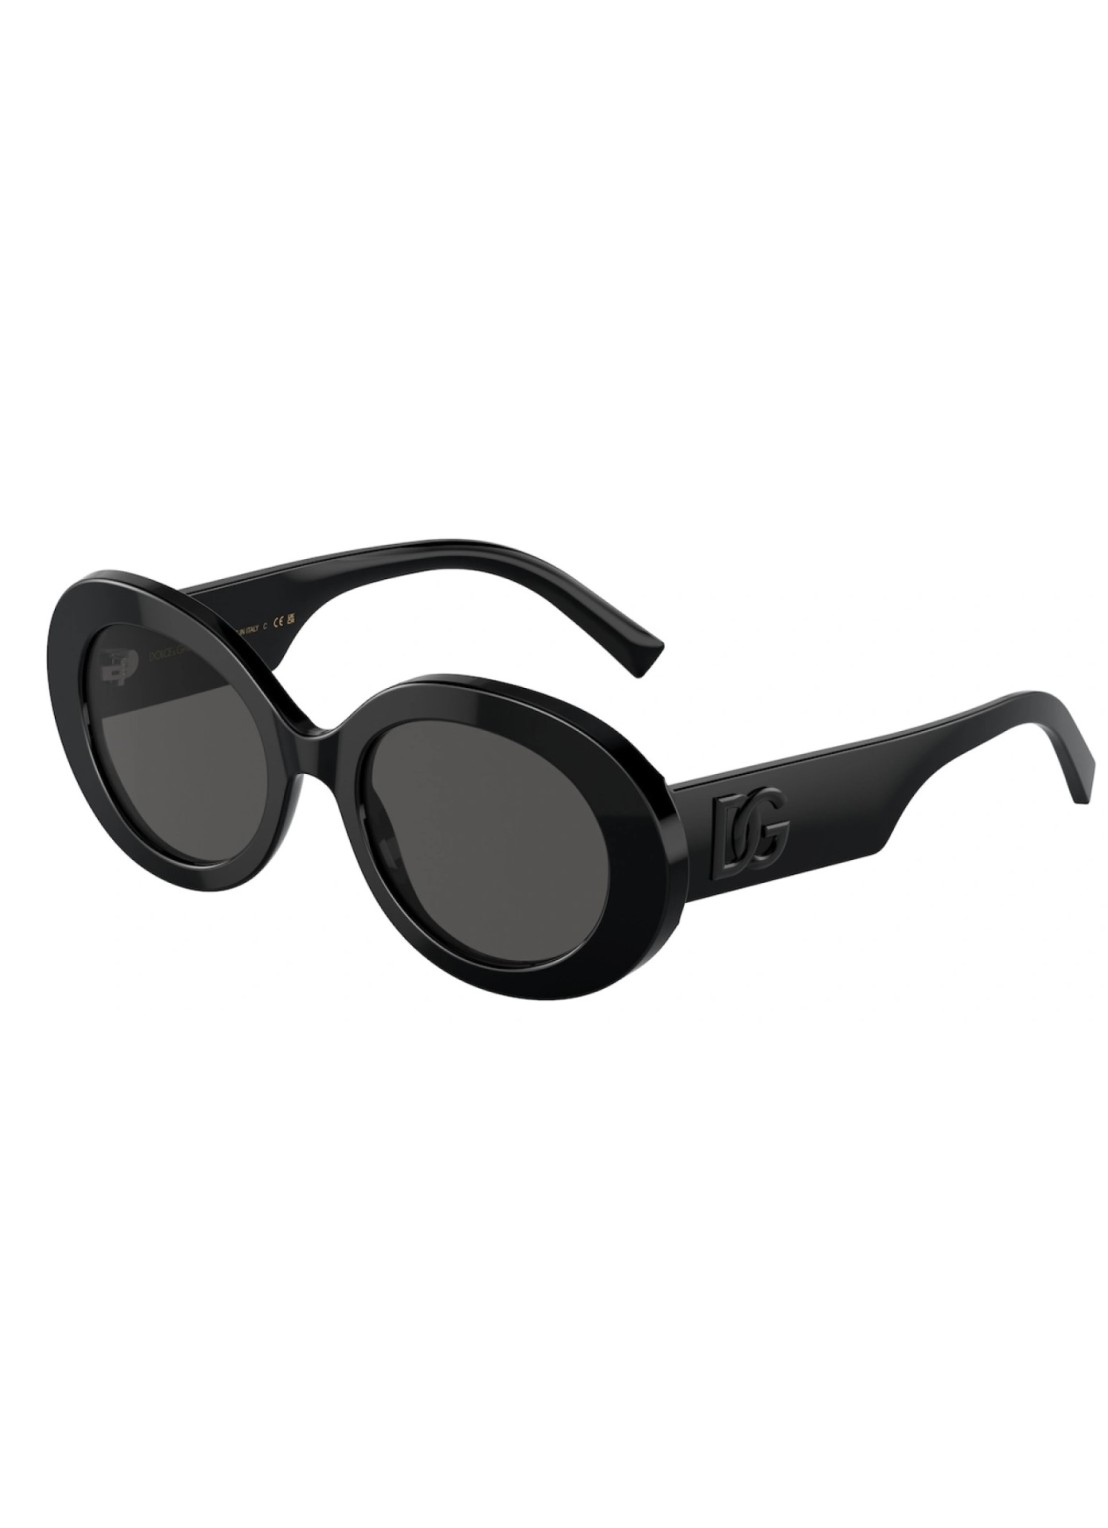 Gafas dolce&gabbana sunglasses woman 0dg4448 0dg4448 501 87 talla transparente
 